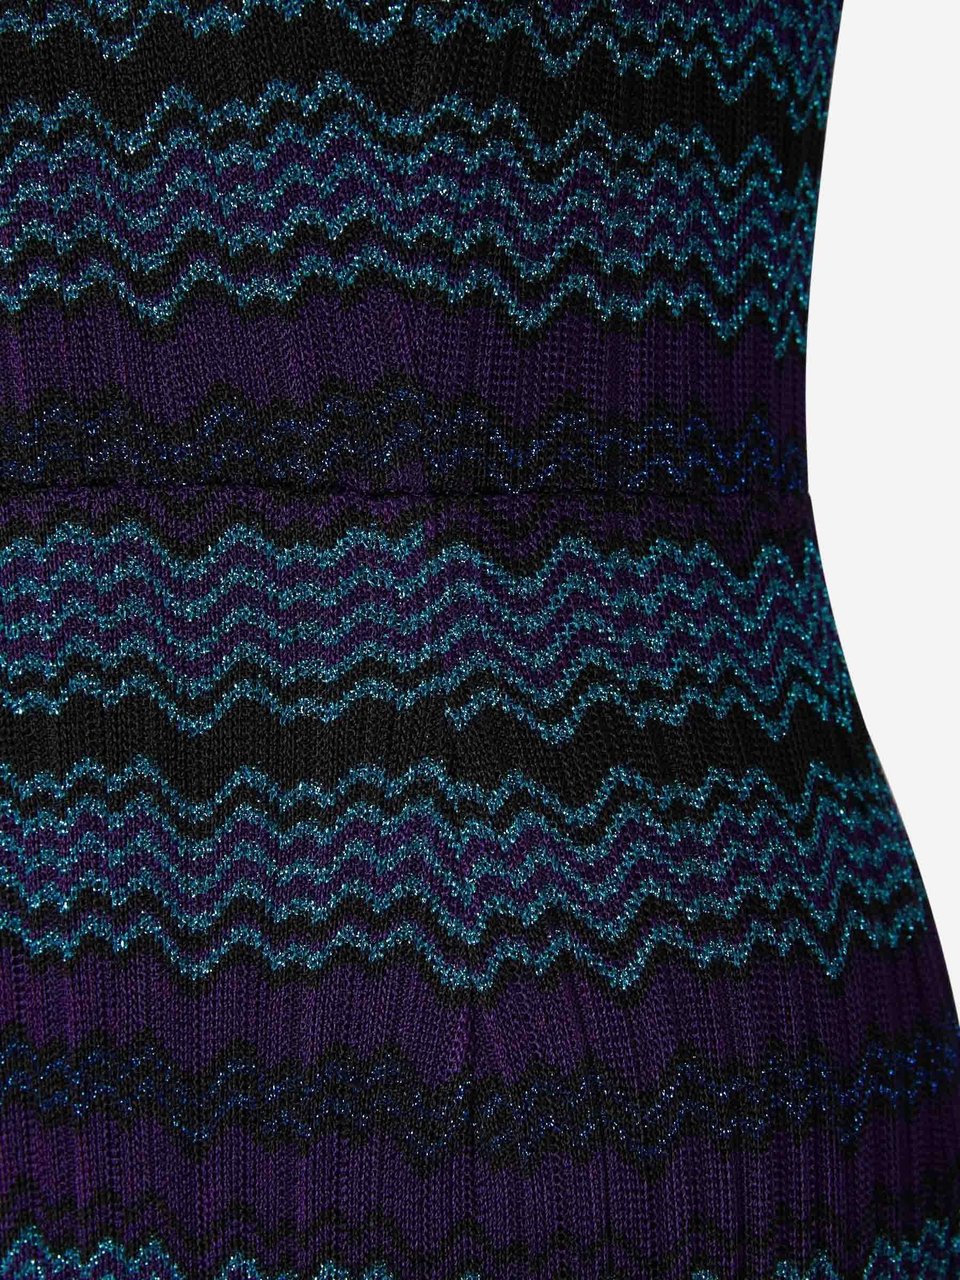 Missoni Zig-Zag Knitted Dress Blauw